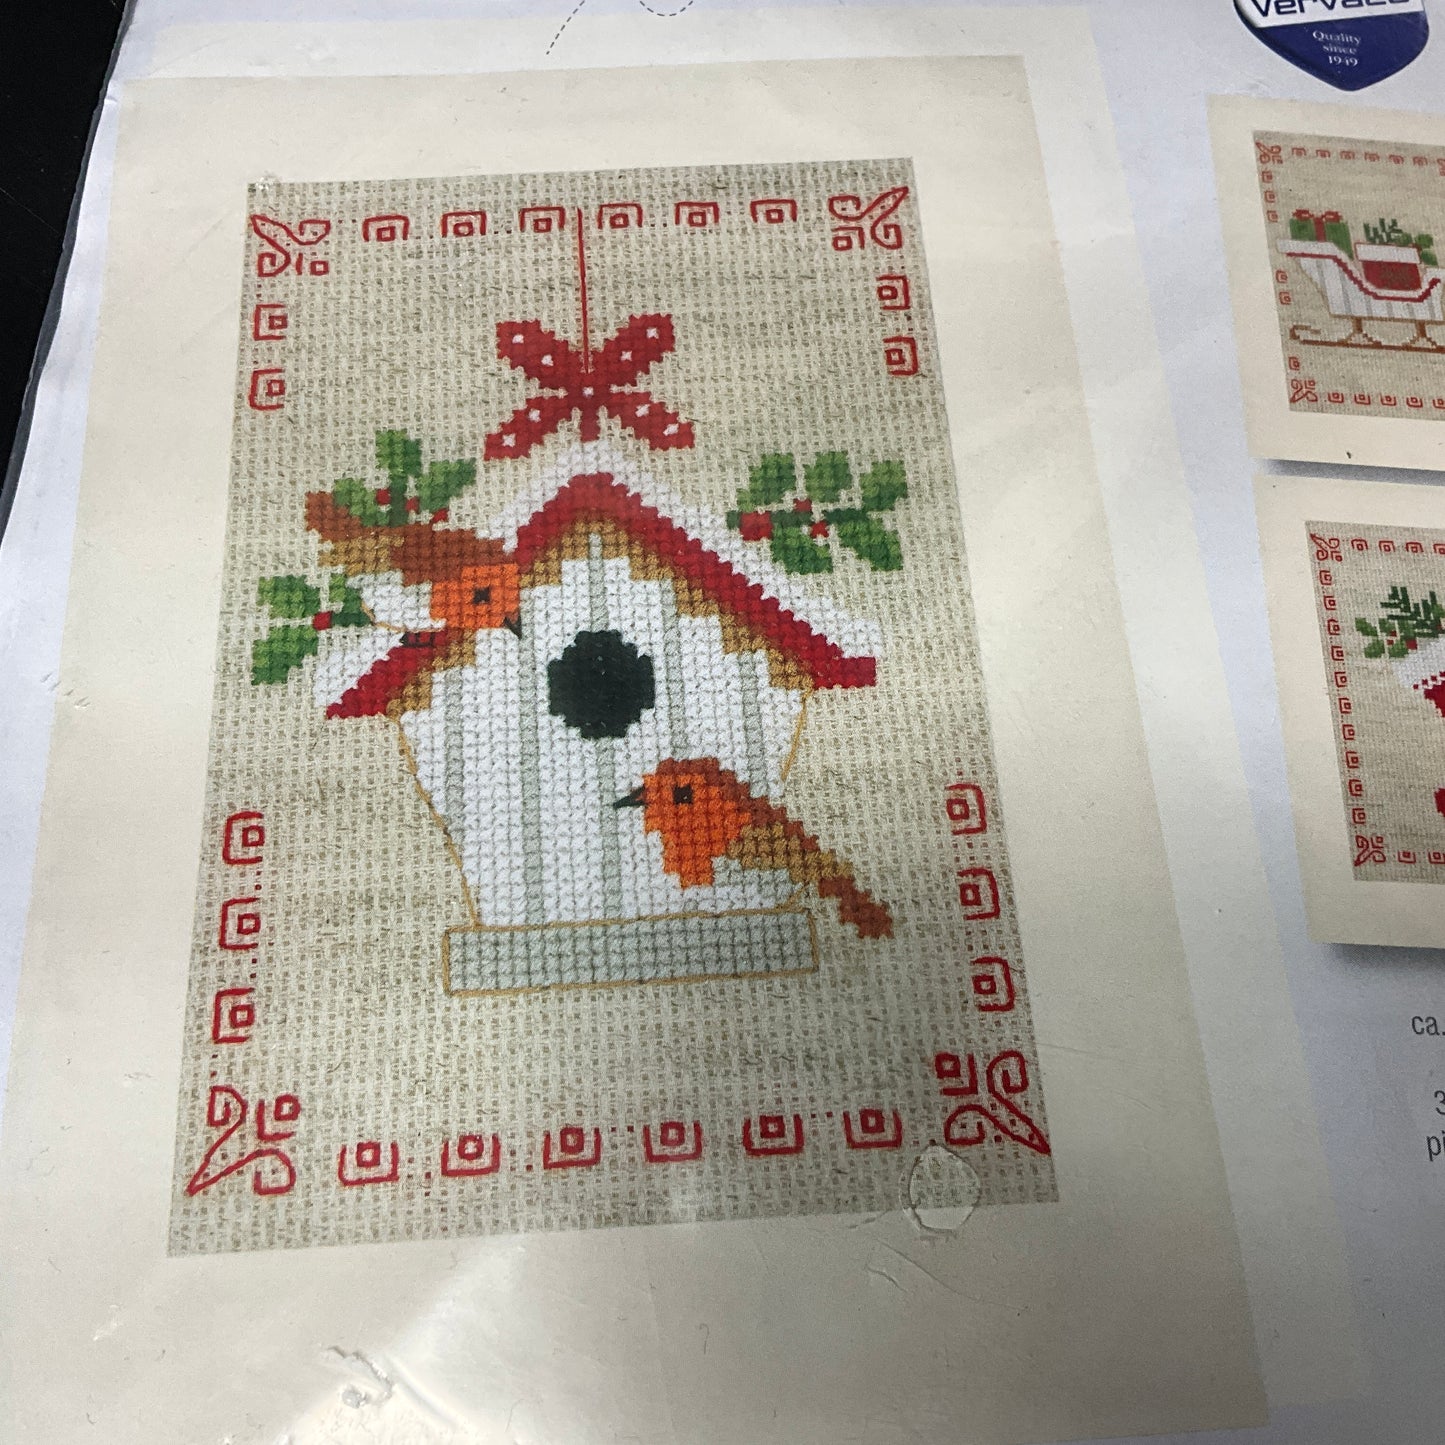 Vervaco Christmas card DIY kits I Stitch! Veruaca cross stitch kit